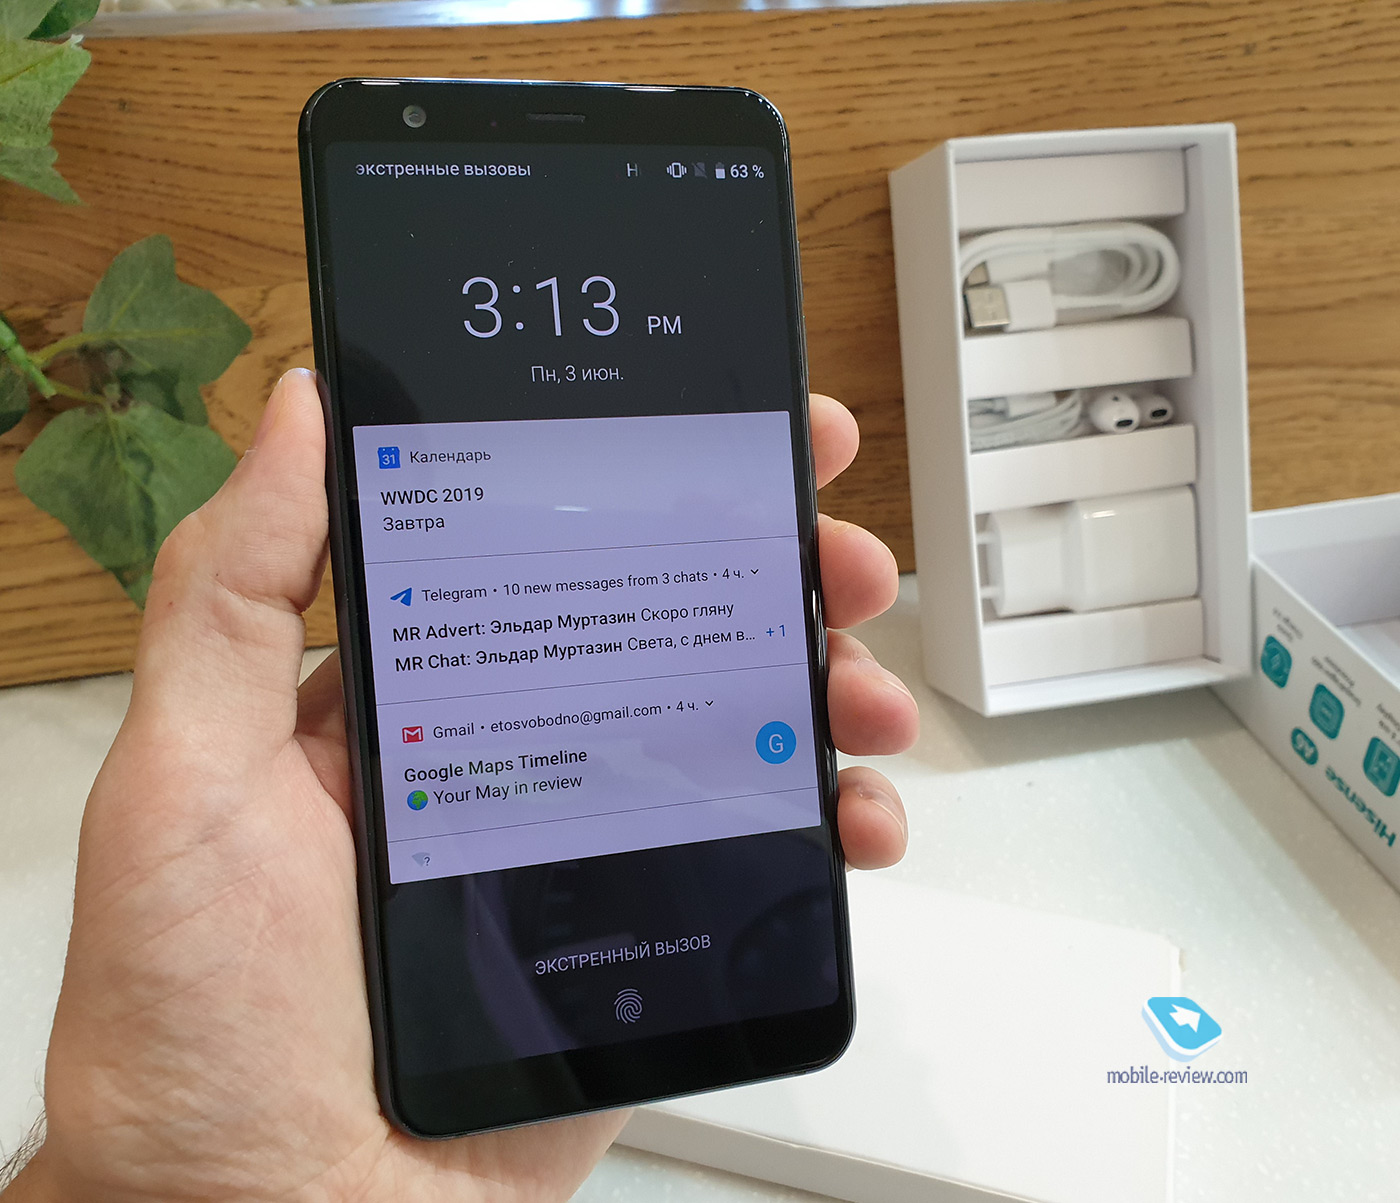 Hisense A6 Dual Screen Smartphone Review